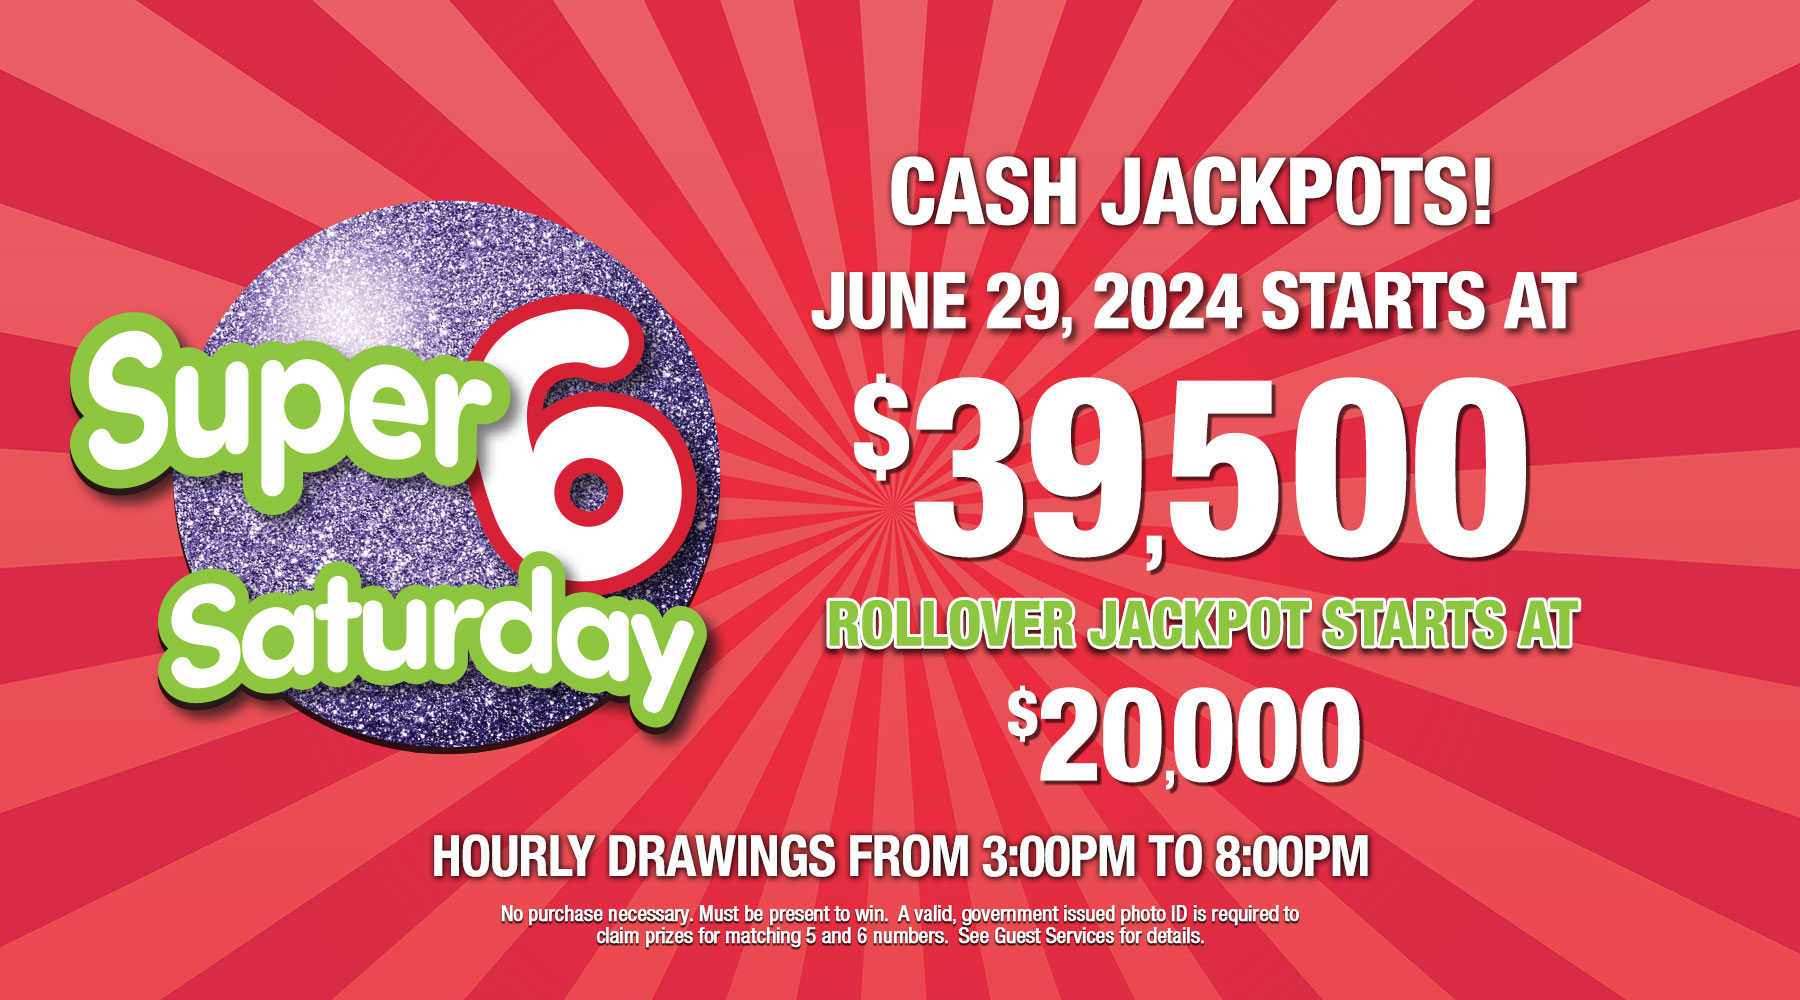 Super 6 Saturday CASH jackpot starts at $39,500 on Saturday June 29, 2024